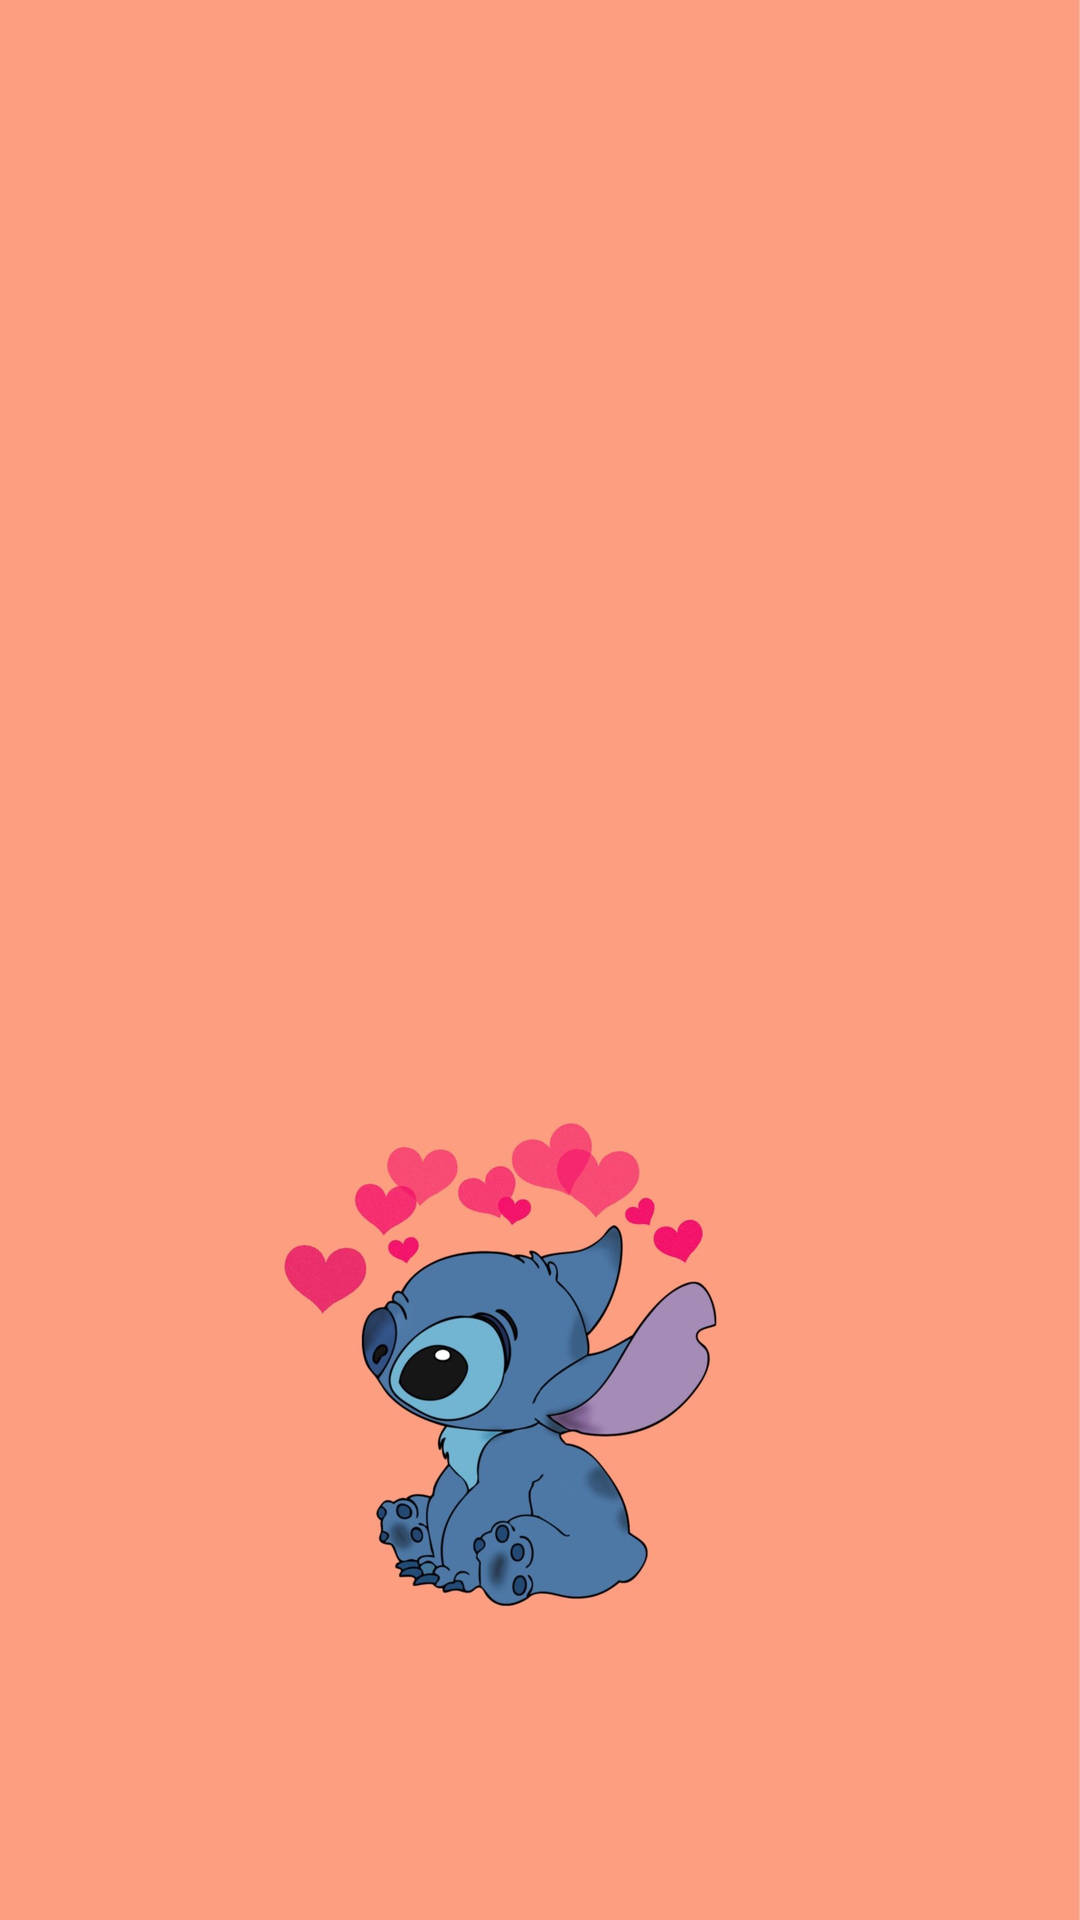 Cute Aesthetic Stitch Pink Heart Emojis Wallpaper